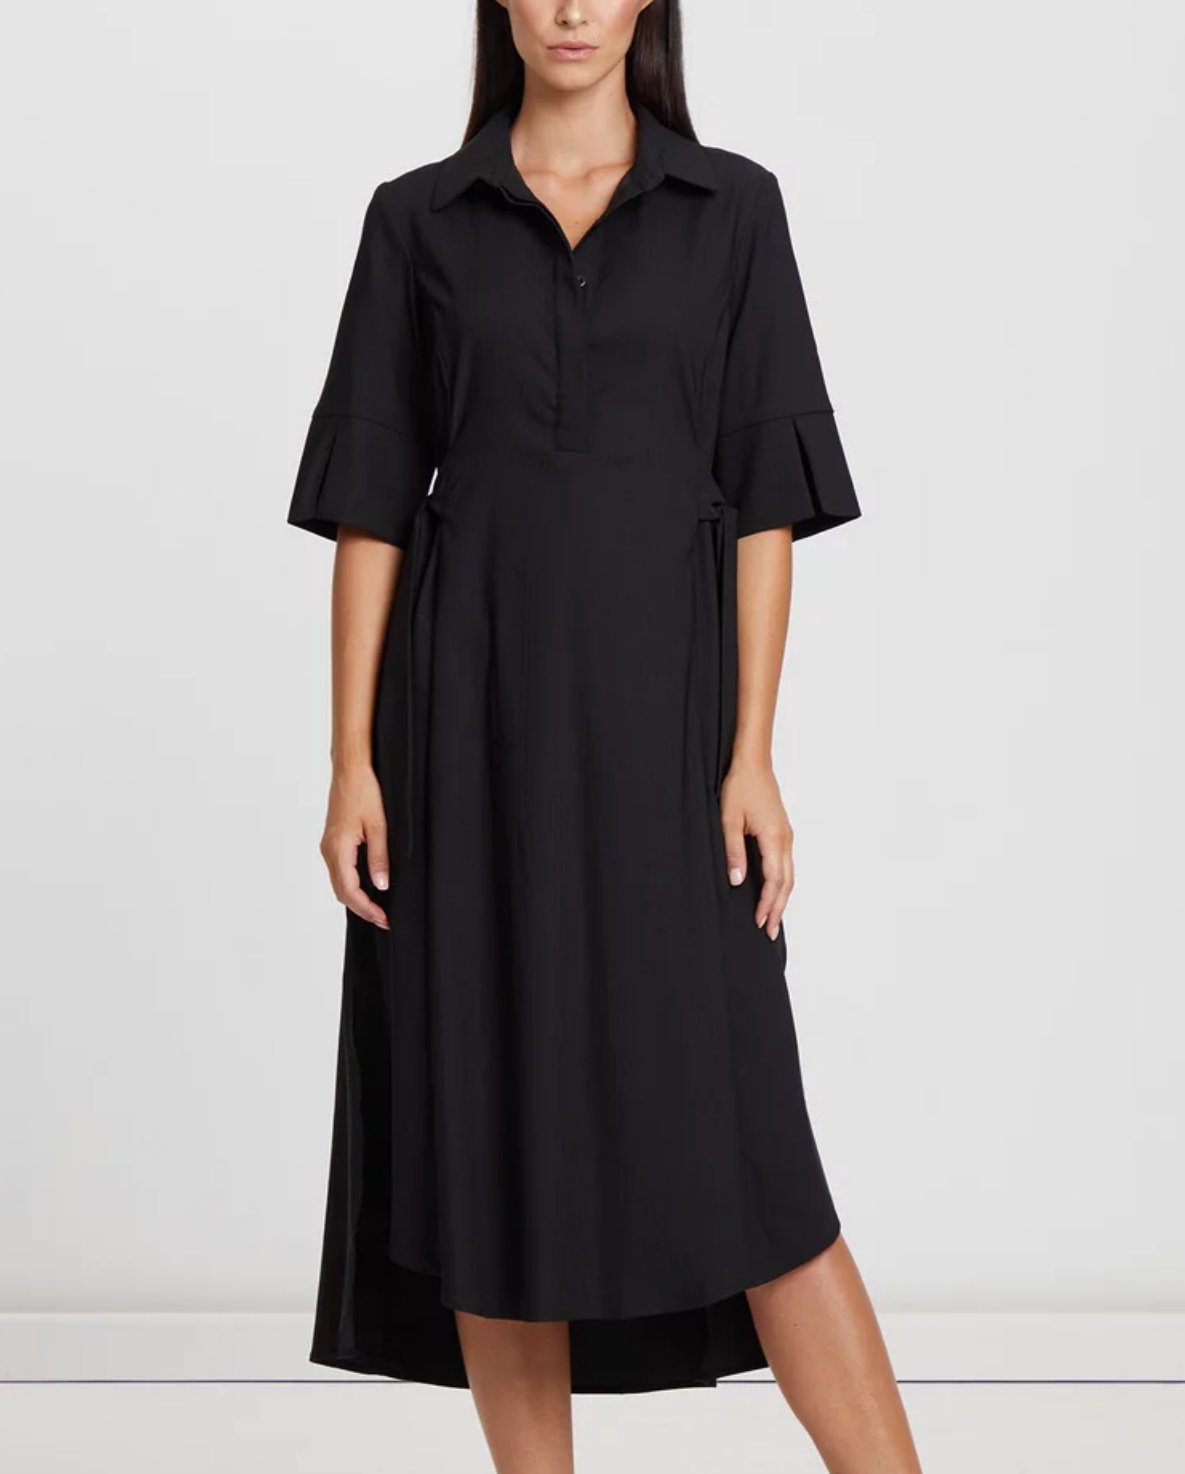 Willa - Black button-up Bowery collared shirt dress